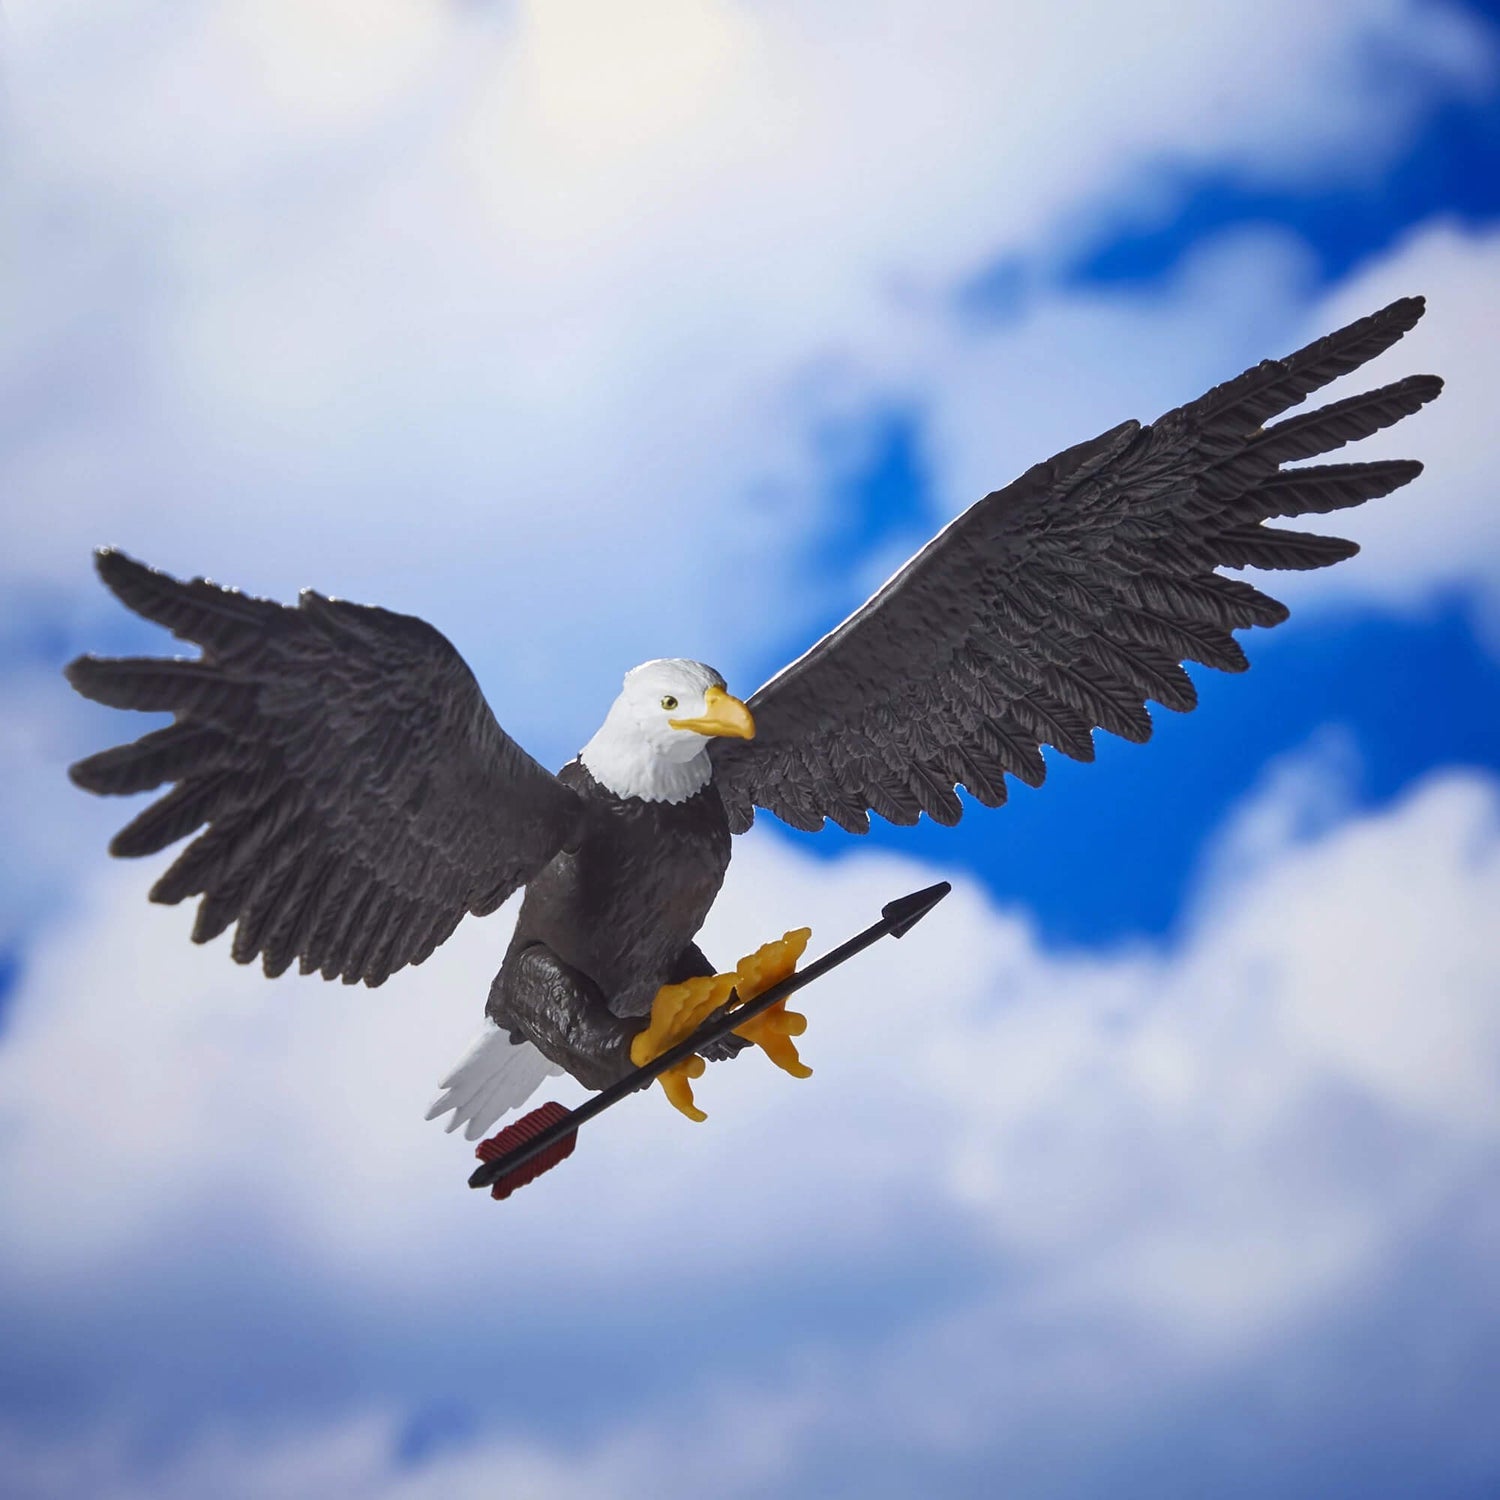 hasbro gi joe classified series freedom eagle flying holding arrow action figure